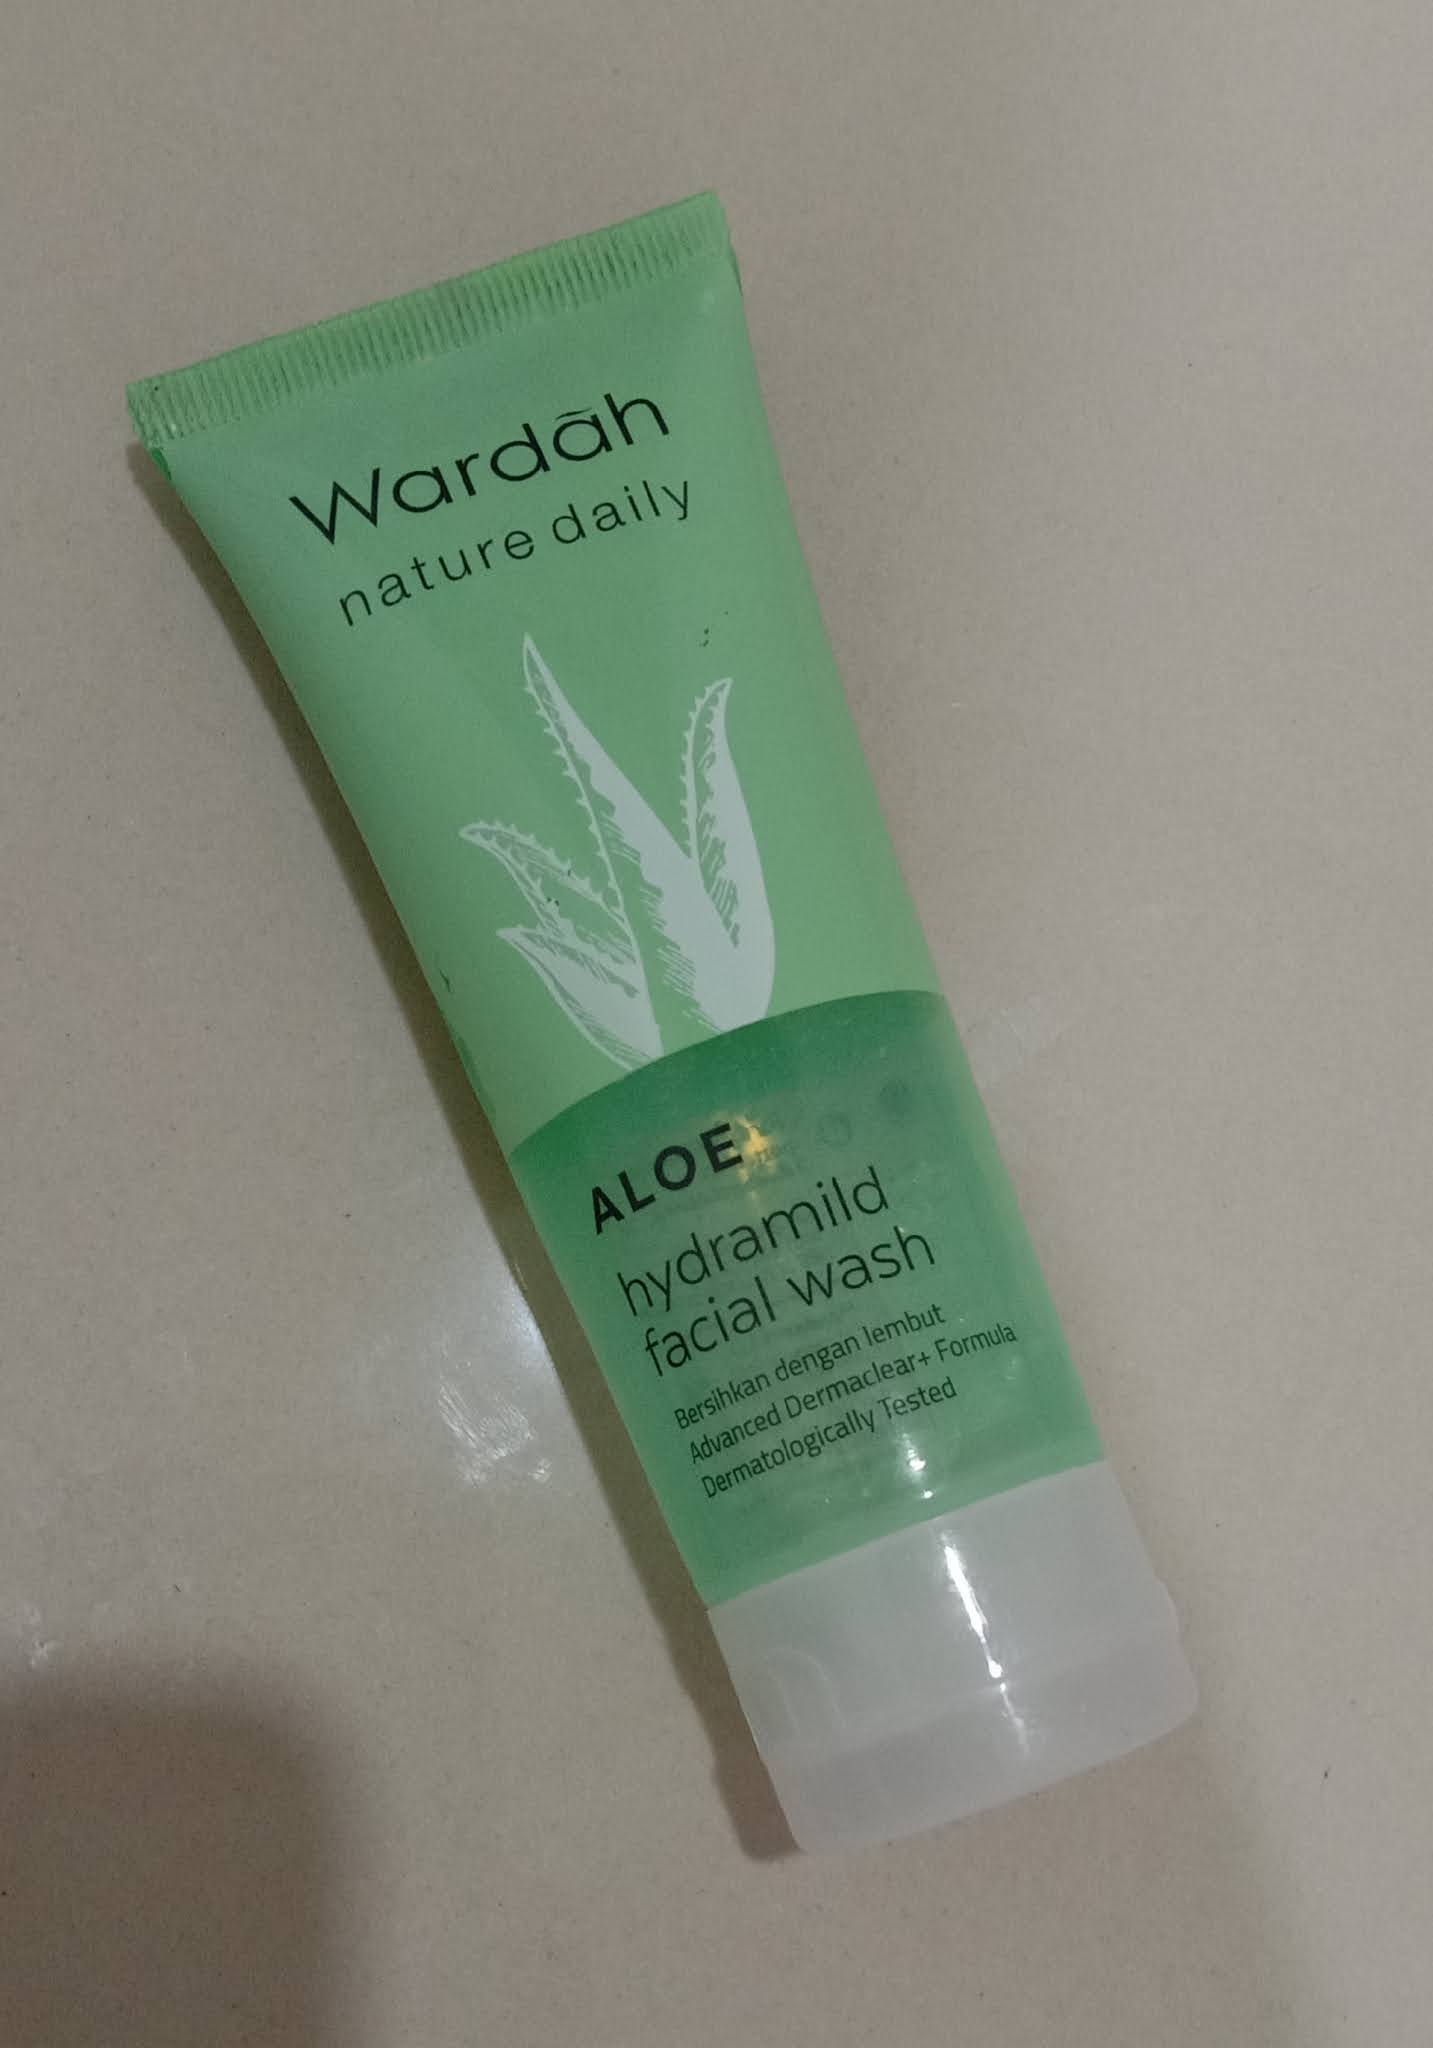 Wardah Aloe Hydramild Facial wash